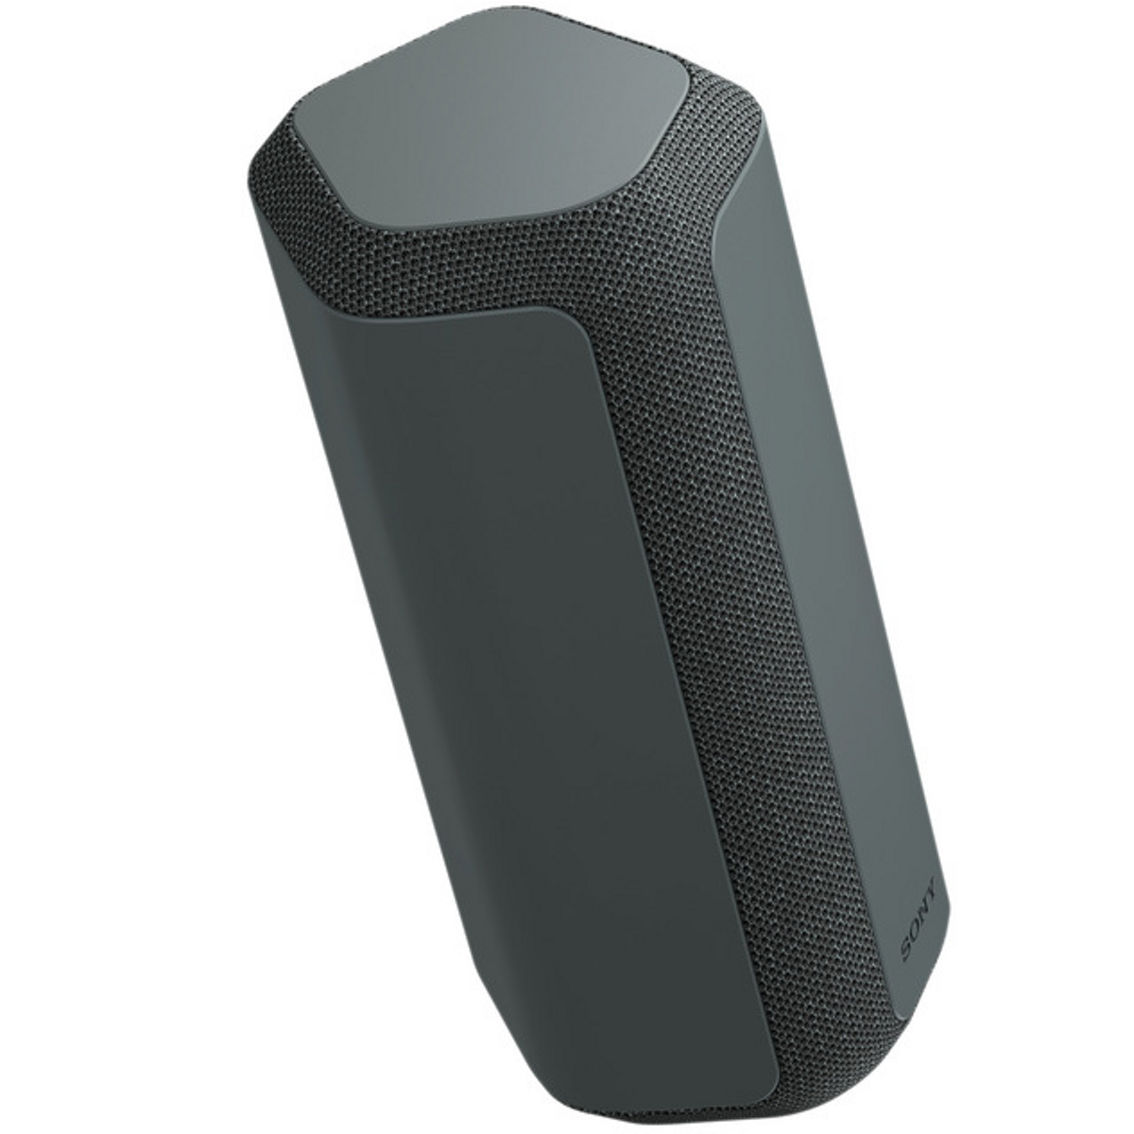 Sony SRSXE300 X-Series Portable Bluetooth Speaker - Image 2 of 4